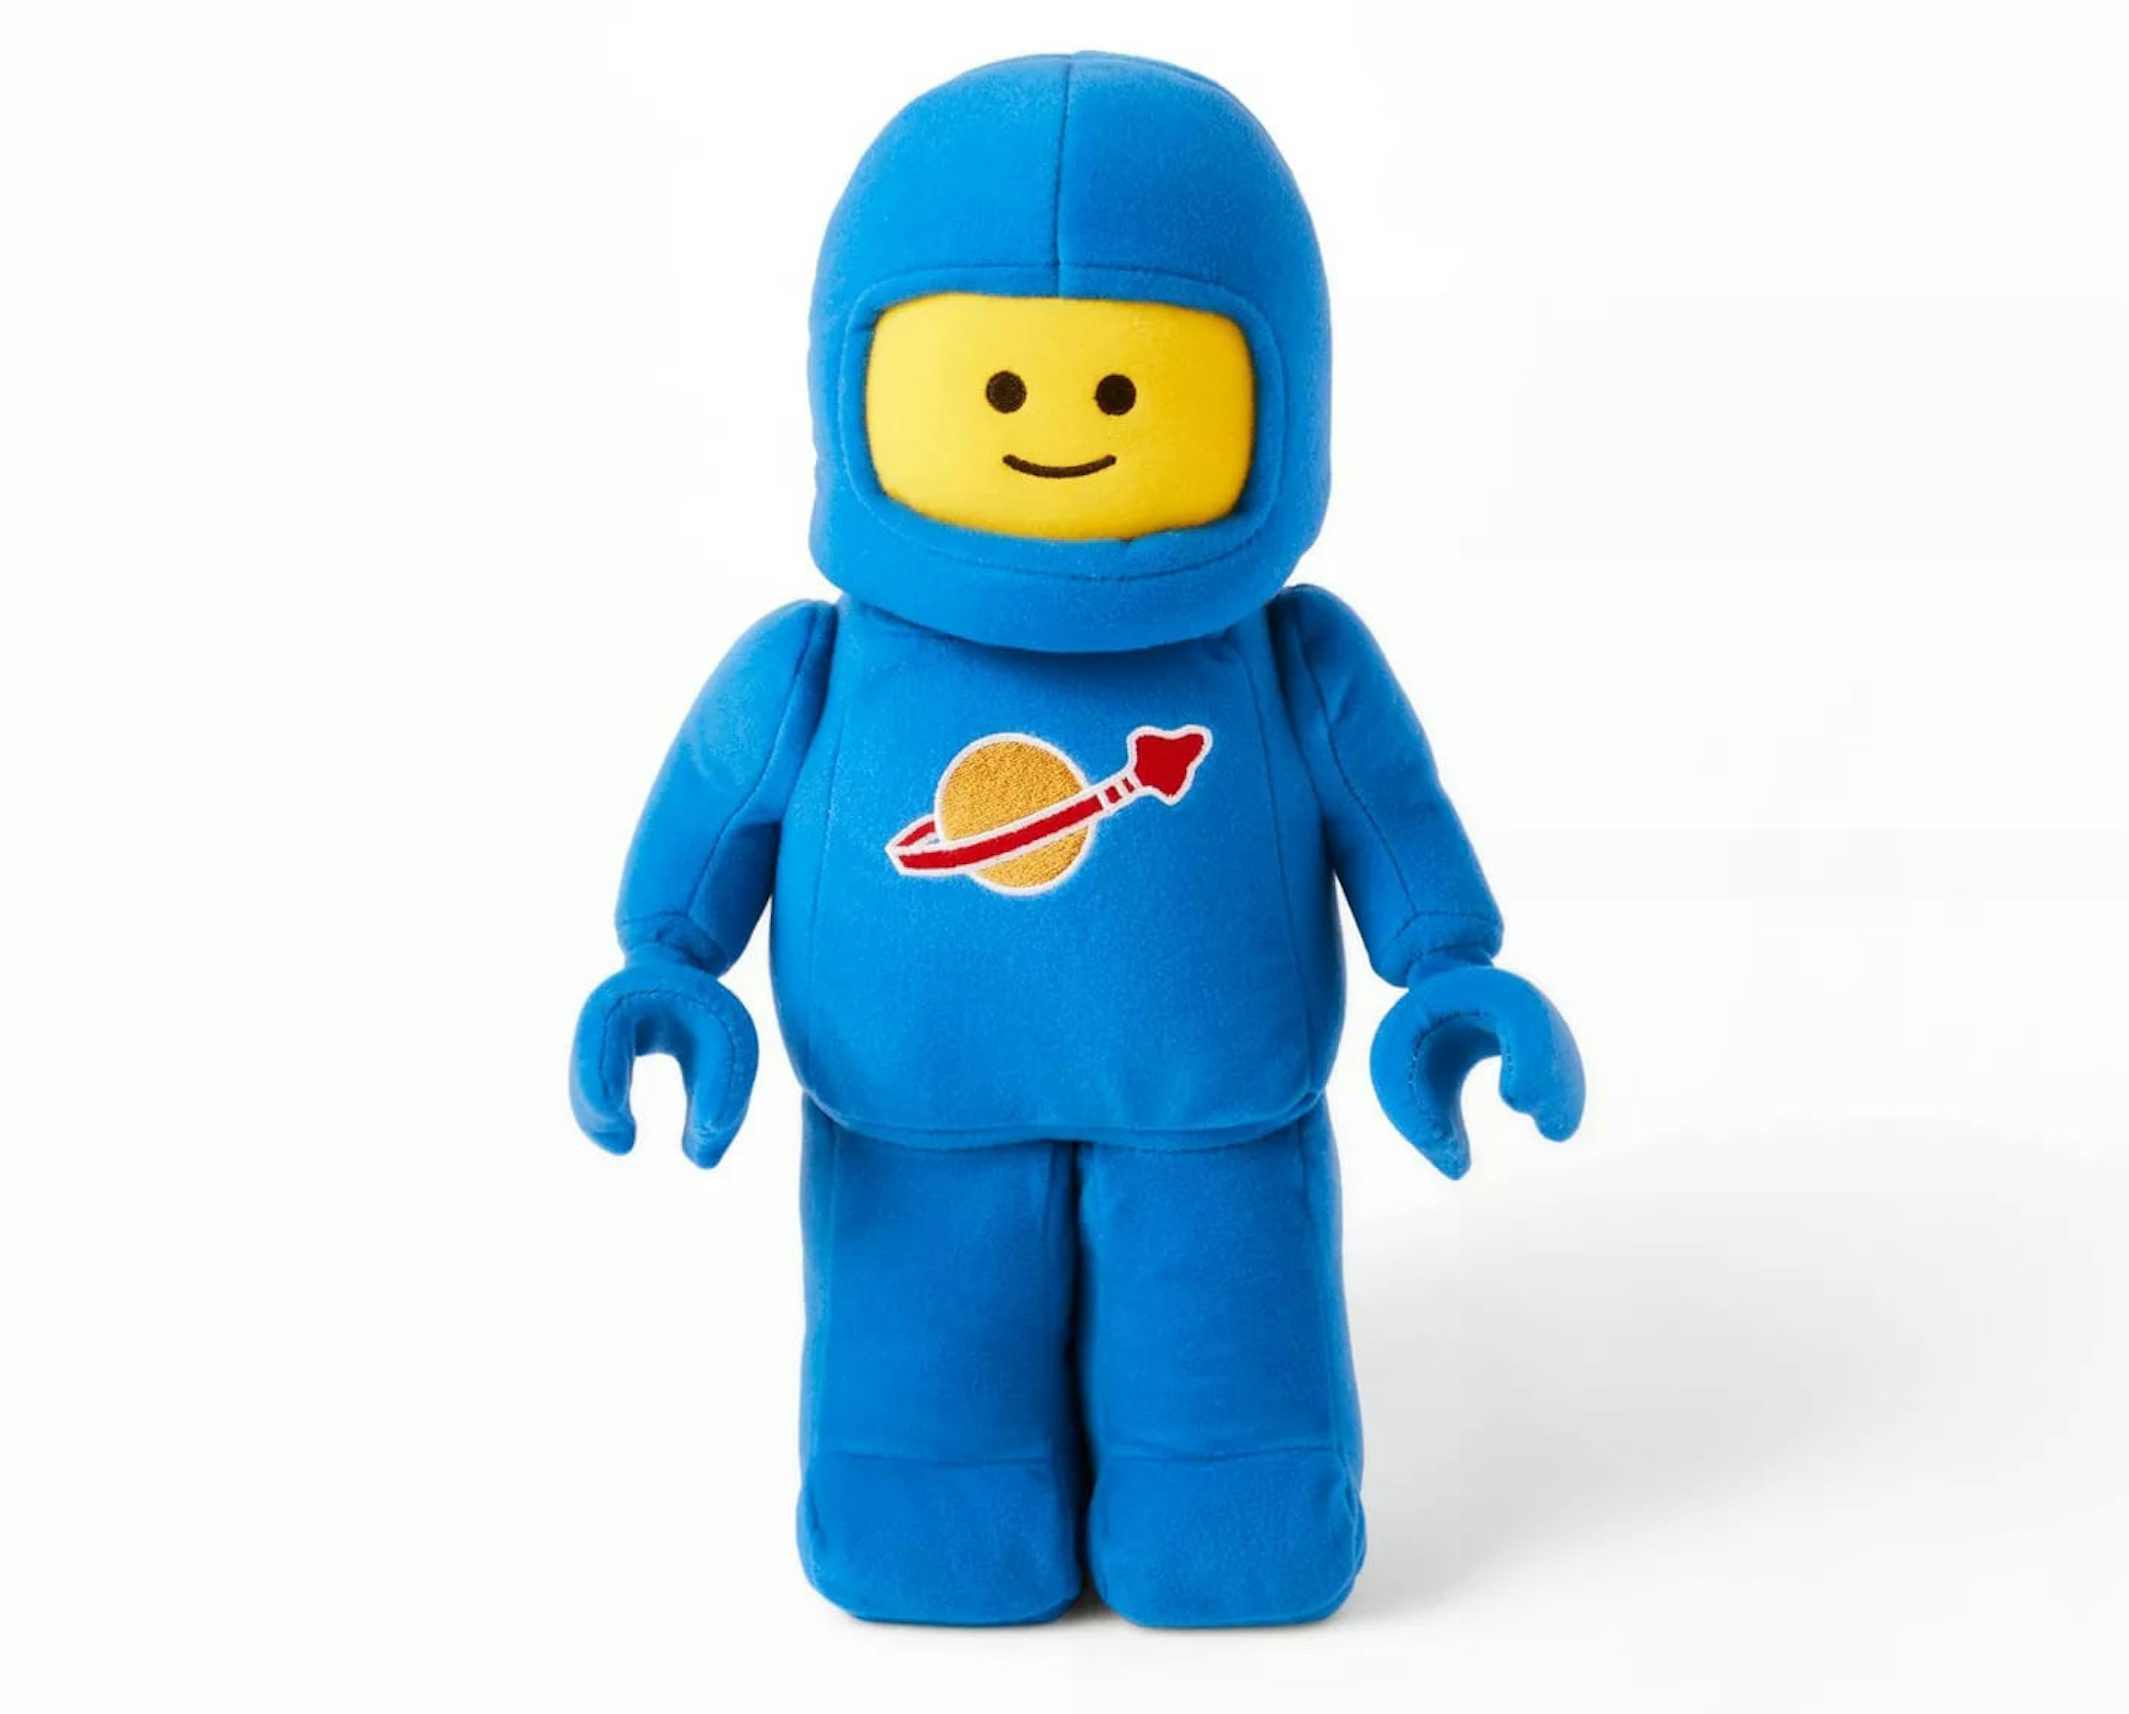 https://images.stockx.com/images/LEGO-Collection-x-Target-Minifigure-Astronaut-Plush-Blue.jpg?fit=fill&bg=FFFFFF&w=1200&h=857&fm=jpg&auto=compress&dpr=2&trim=color&updated_at=1639088777&q=60